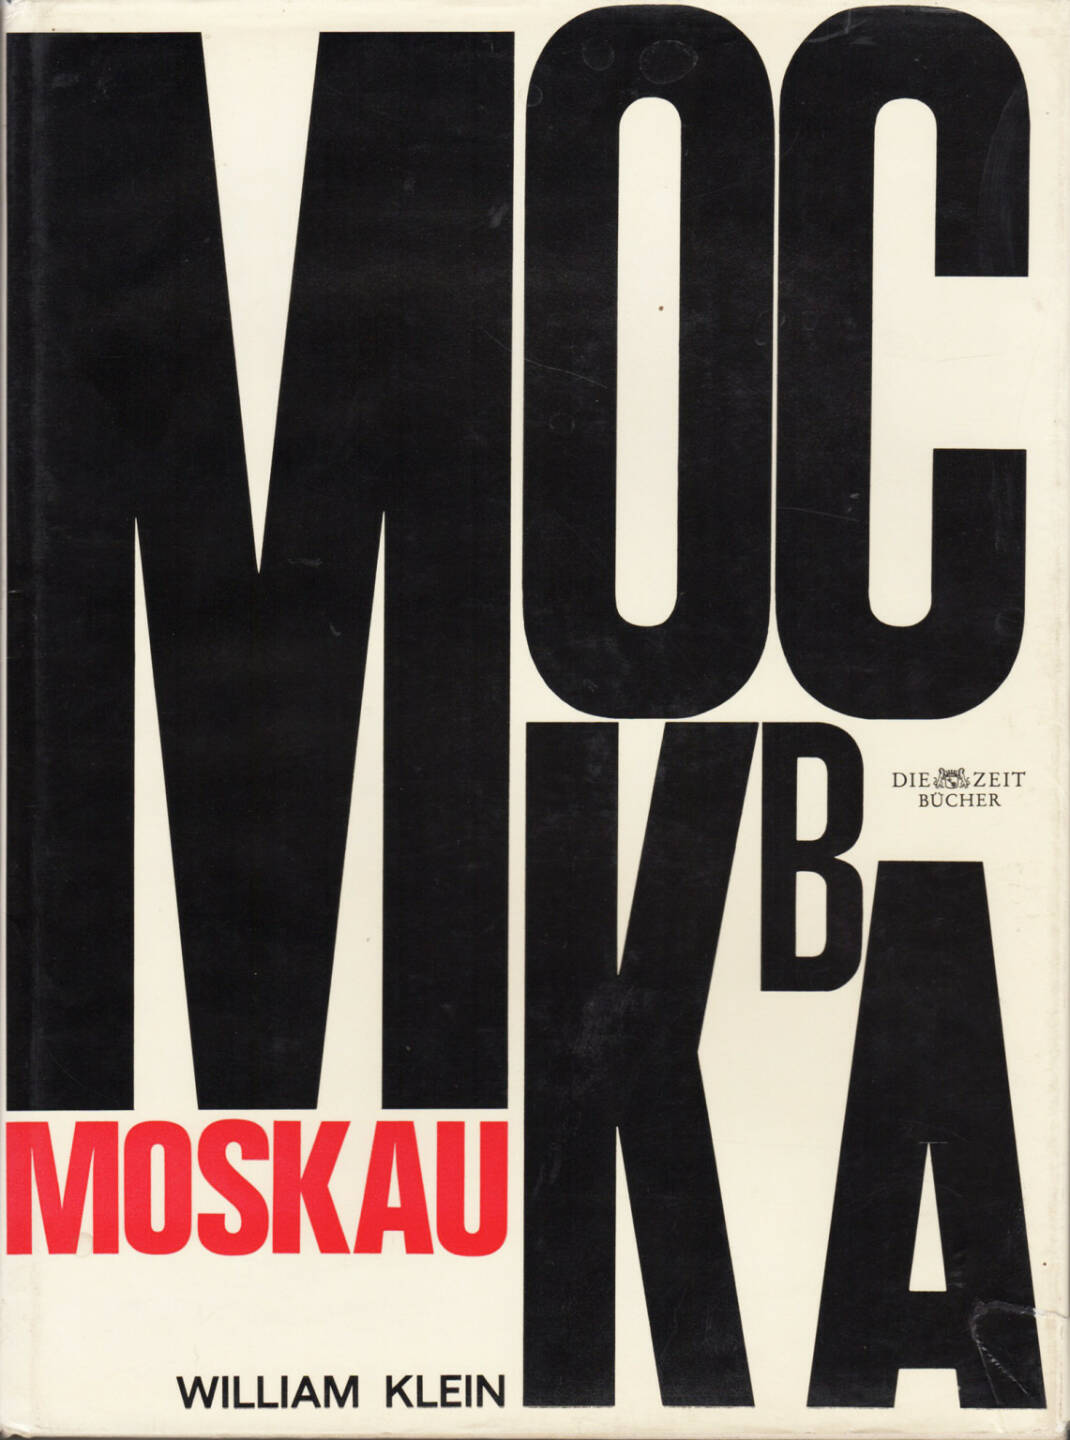 William Klein - Moskau/Moscow (1965), 300-500 Euro http://josefchladek.com/book/william_klein_-_moskau